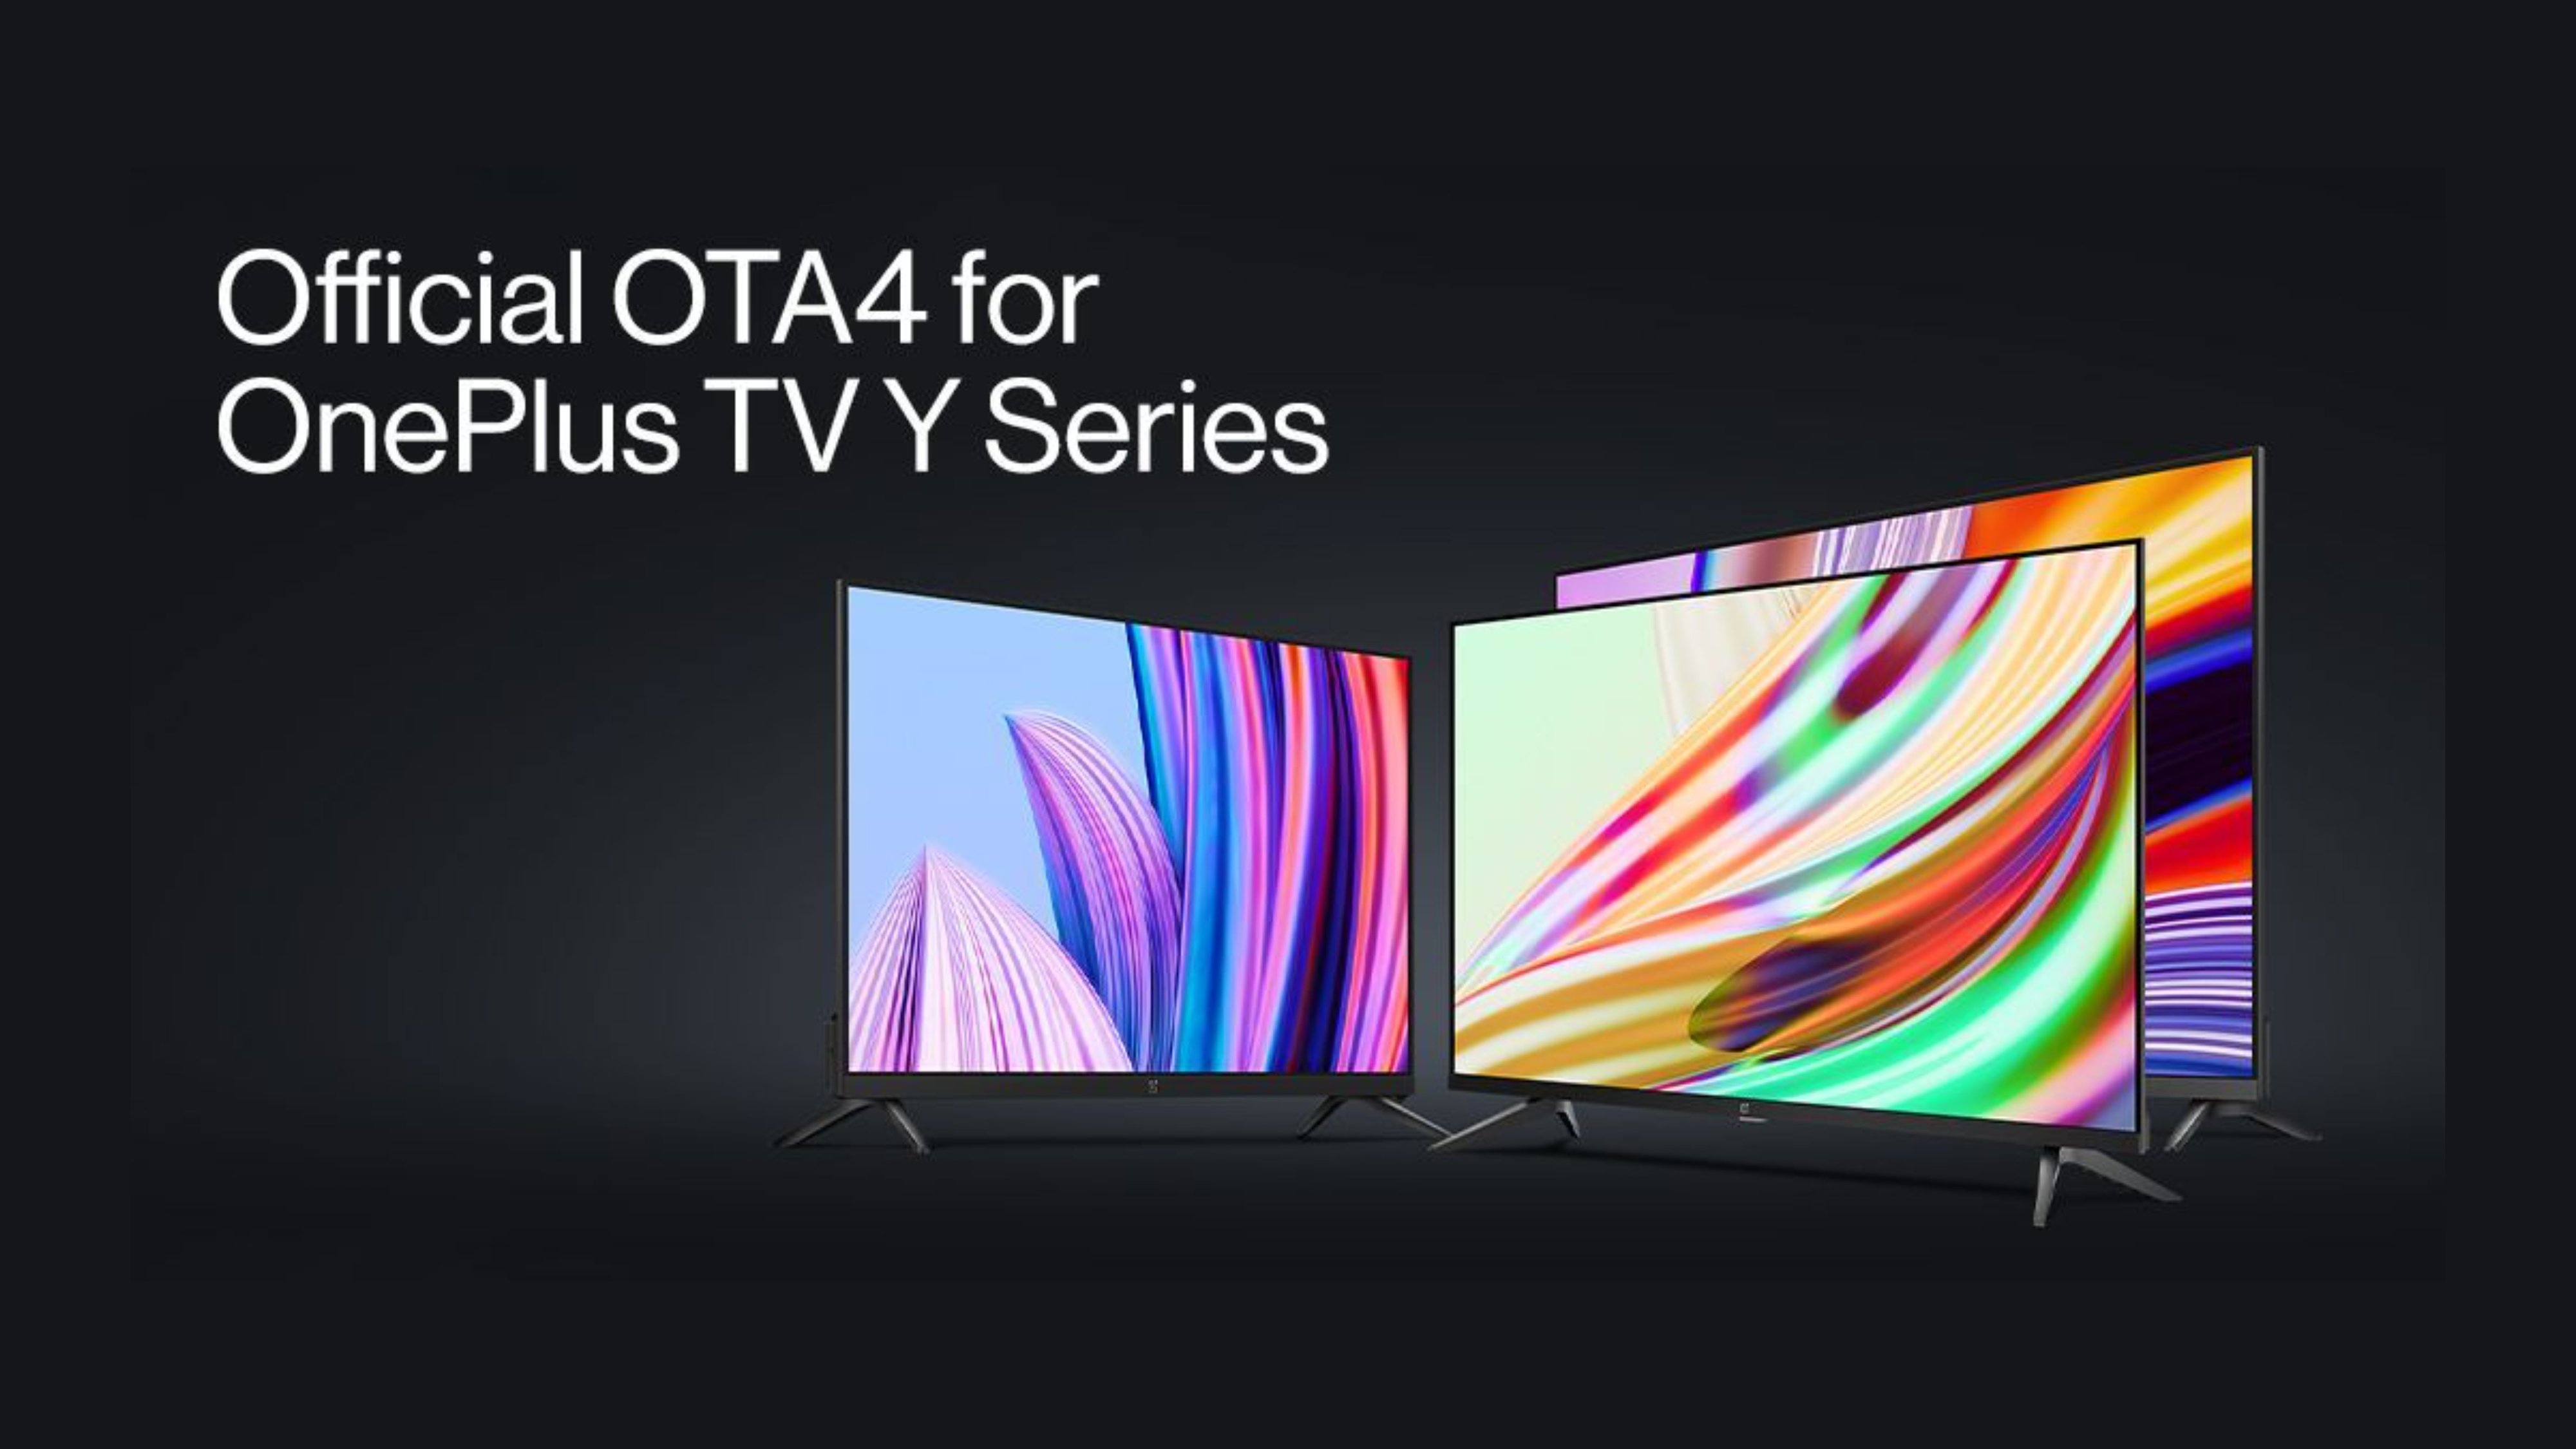 OnePlus TV Y Series OTA4 Update